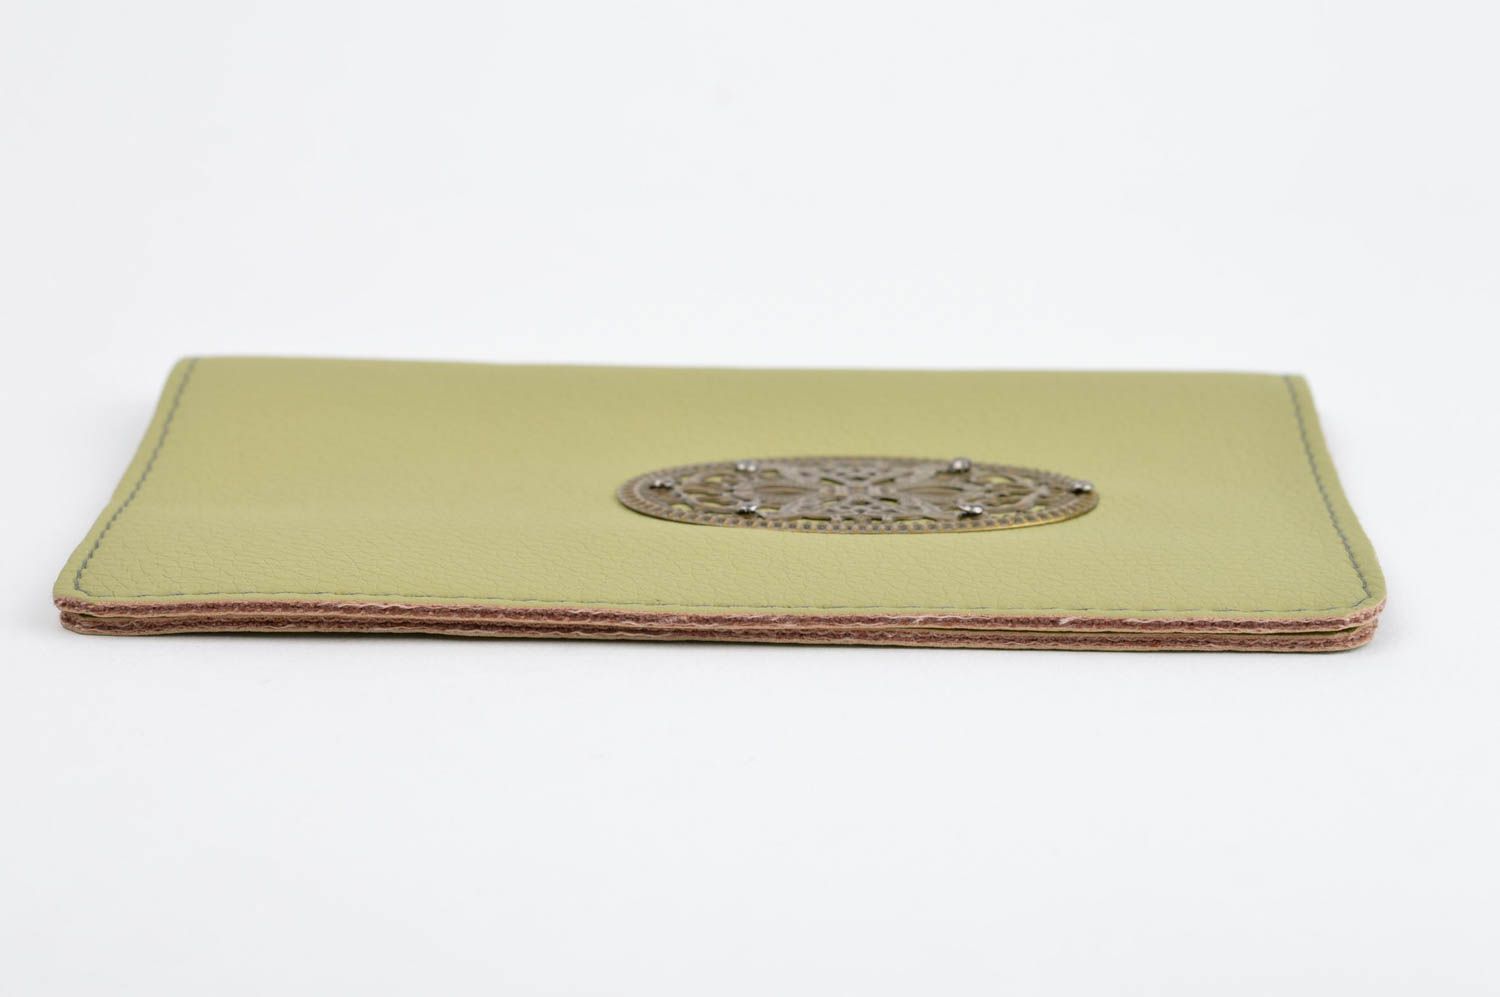 Porte passeport cuir artificiel fait main vert clair design Cadeau original photo 2